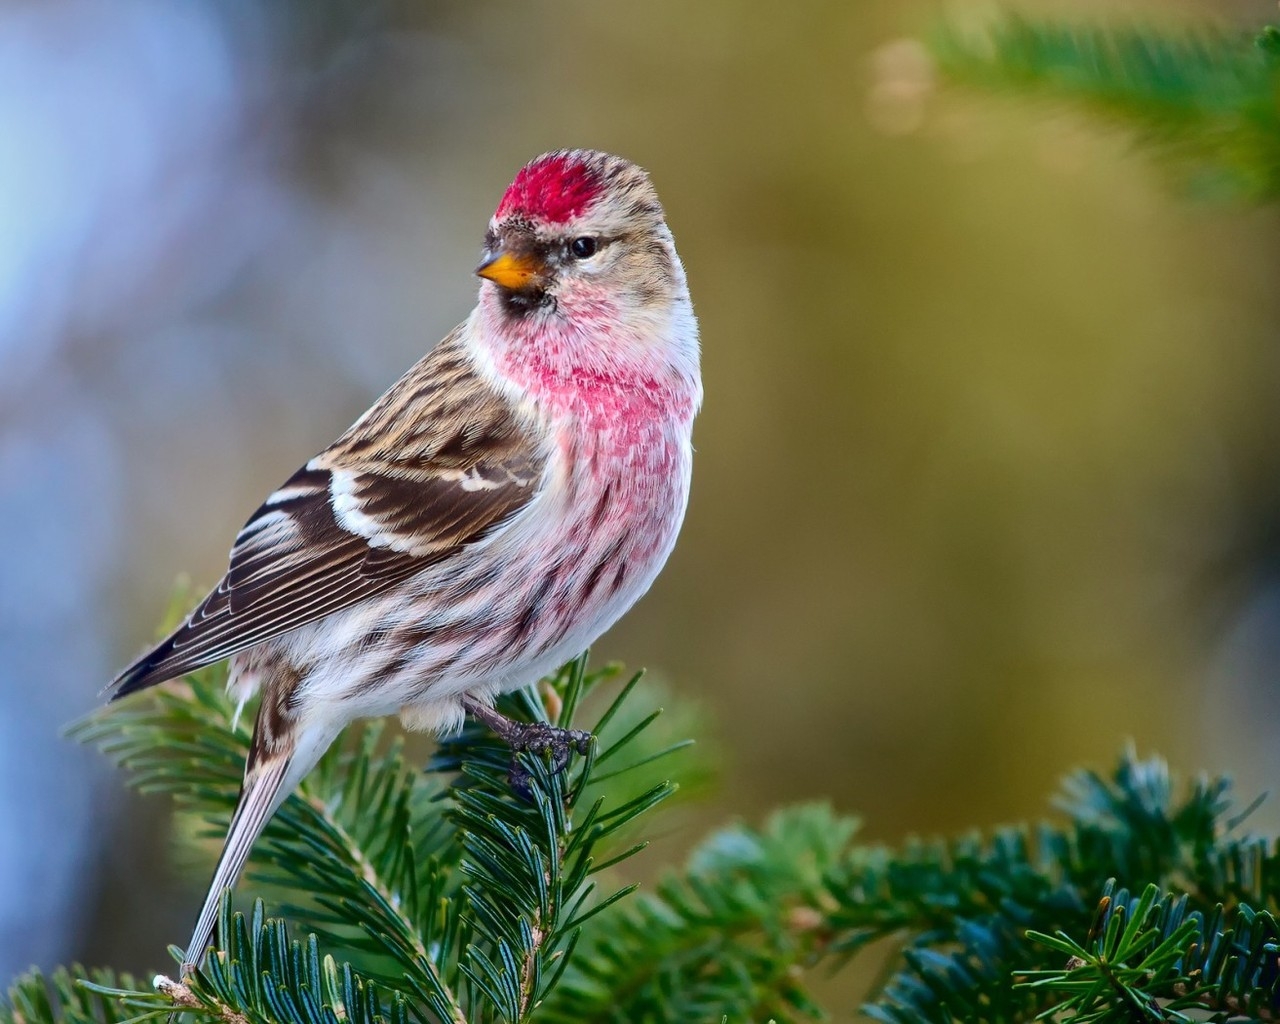 Redpoll Bird for 1280 x 1024 resolution